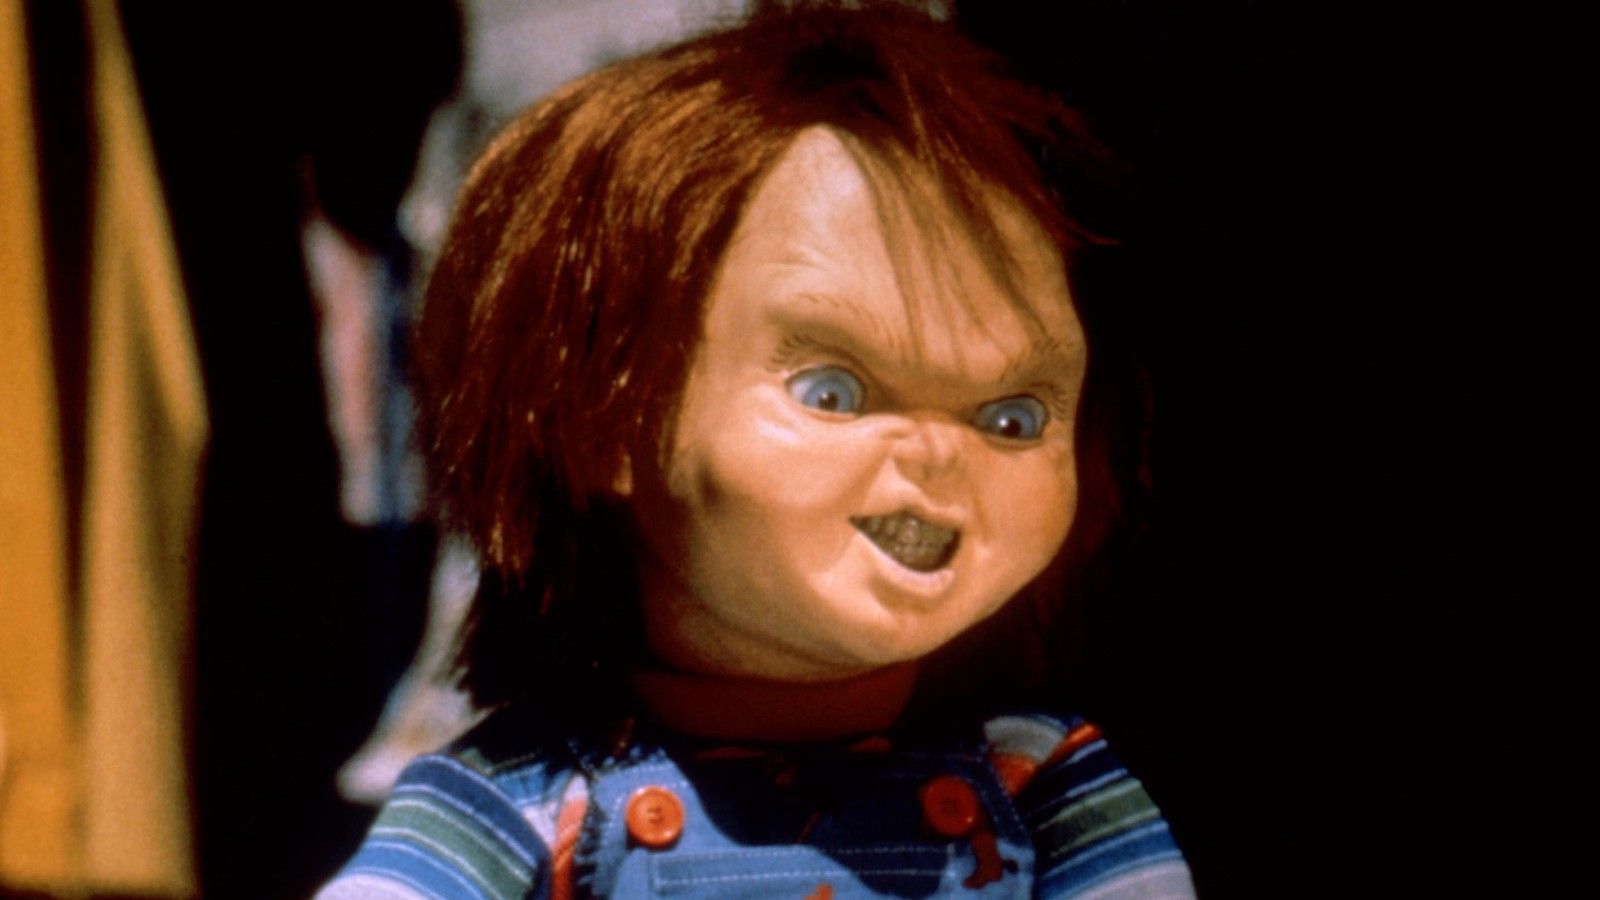 Child's Play': Chucky and Horror of Creepy Dolls - The Atlantic